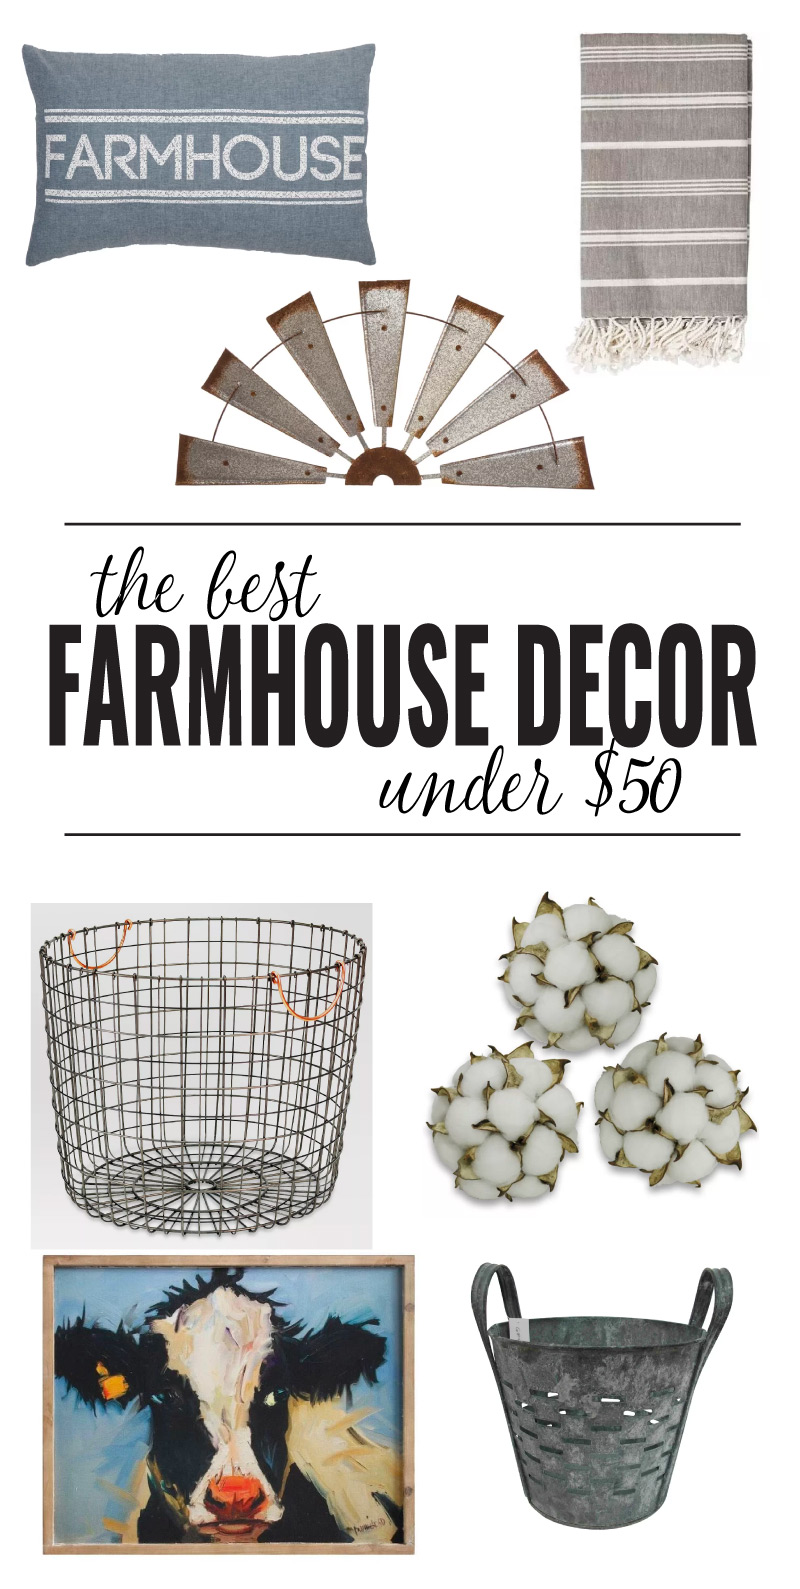 Affordable Farmhouse decor under $50